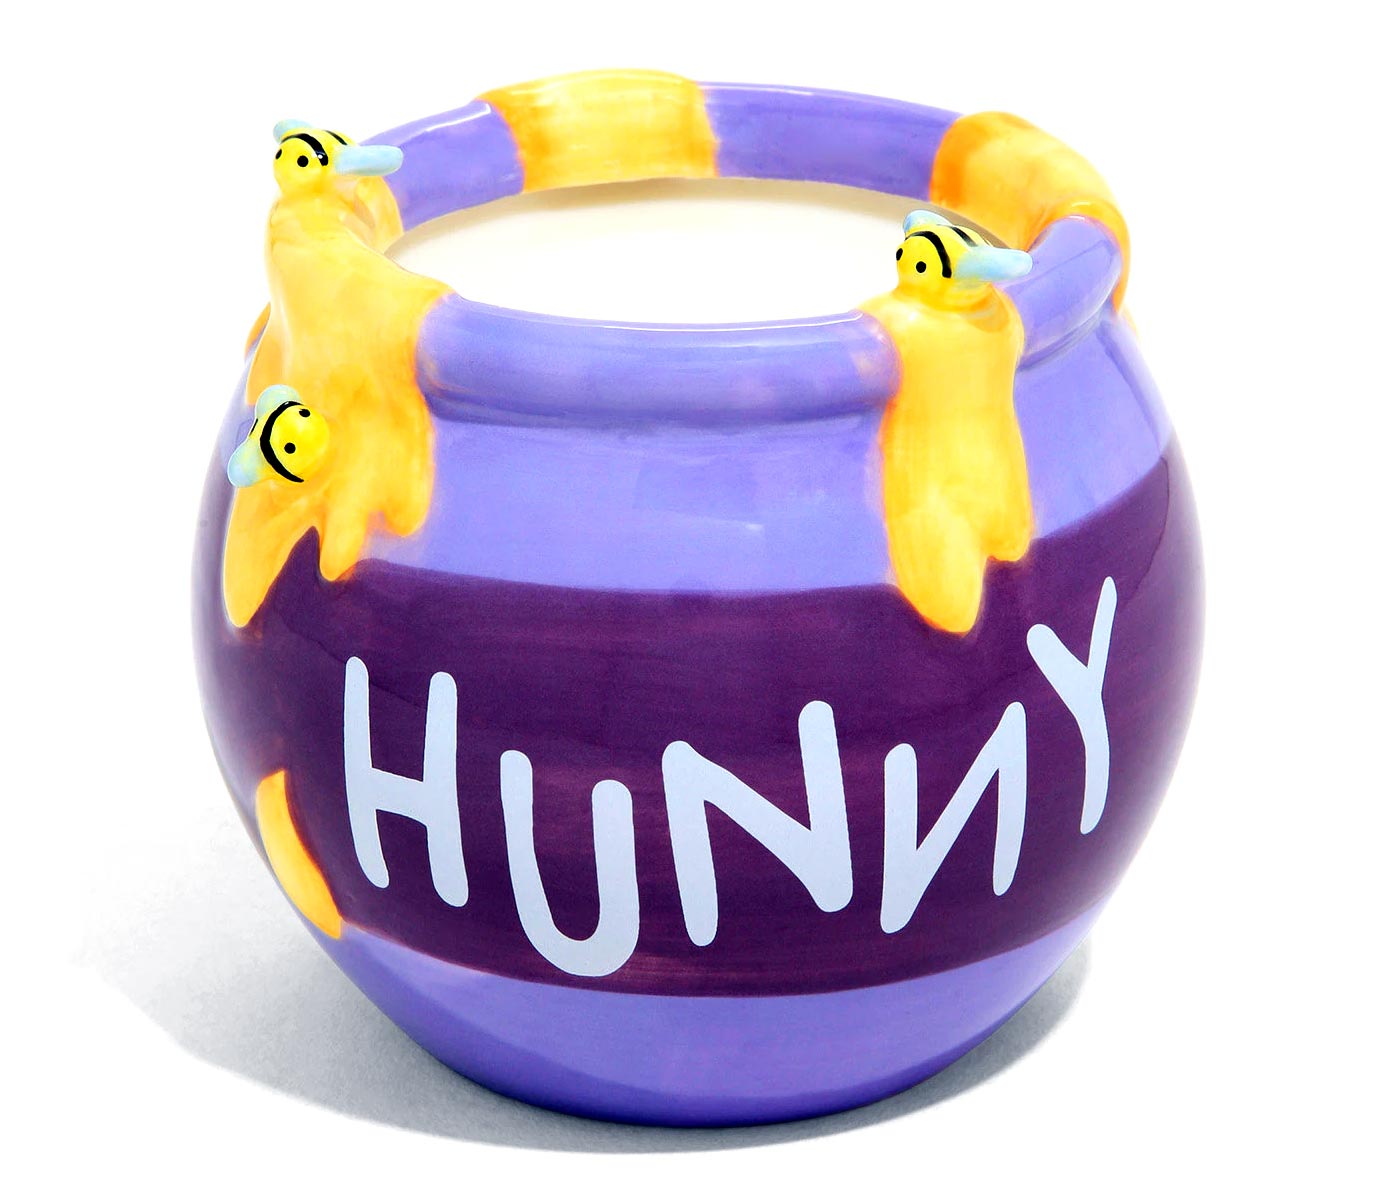 DIY Winnie the Pooh Inspired Hunny Pot Candy Jar 